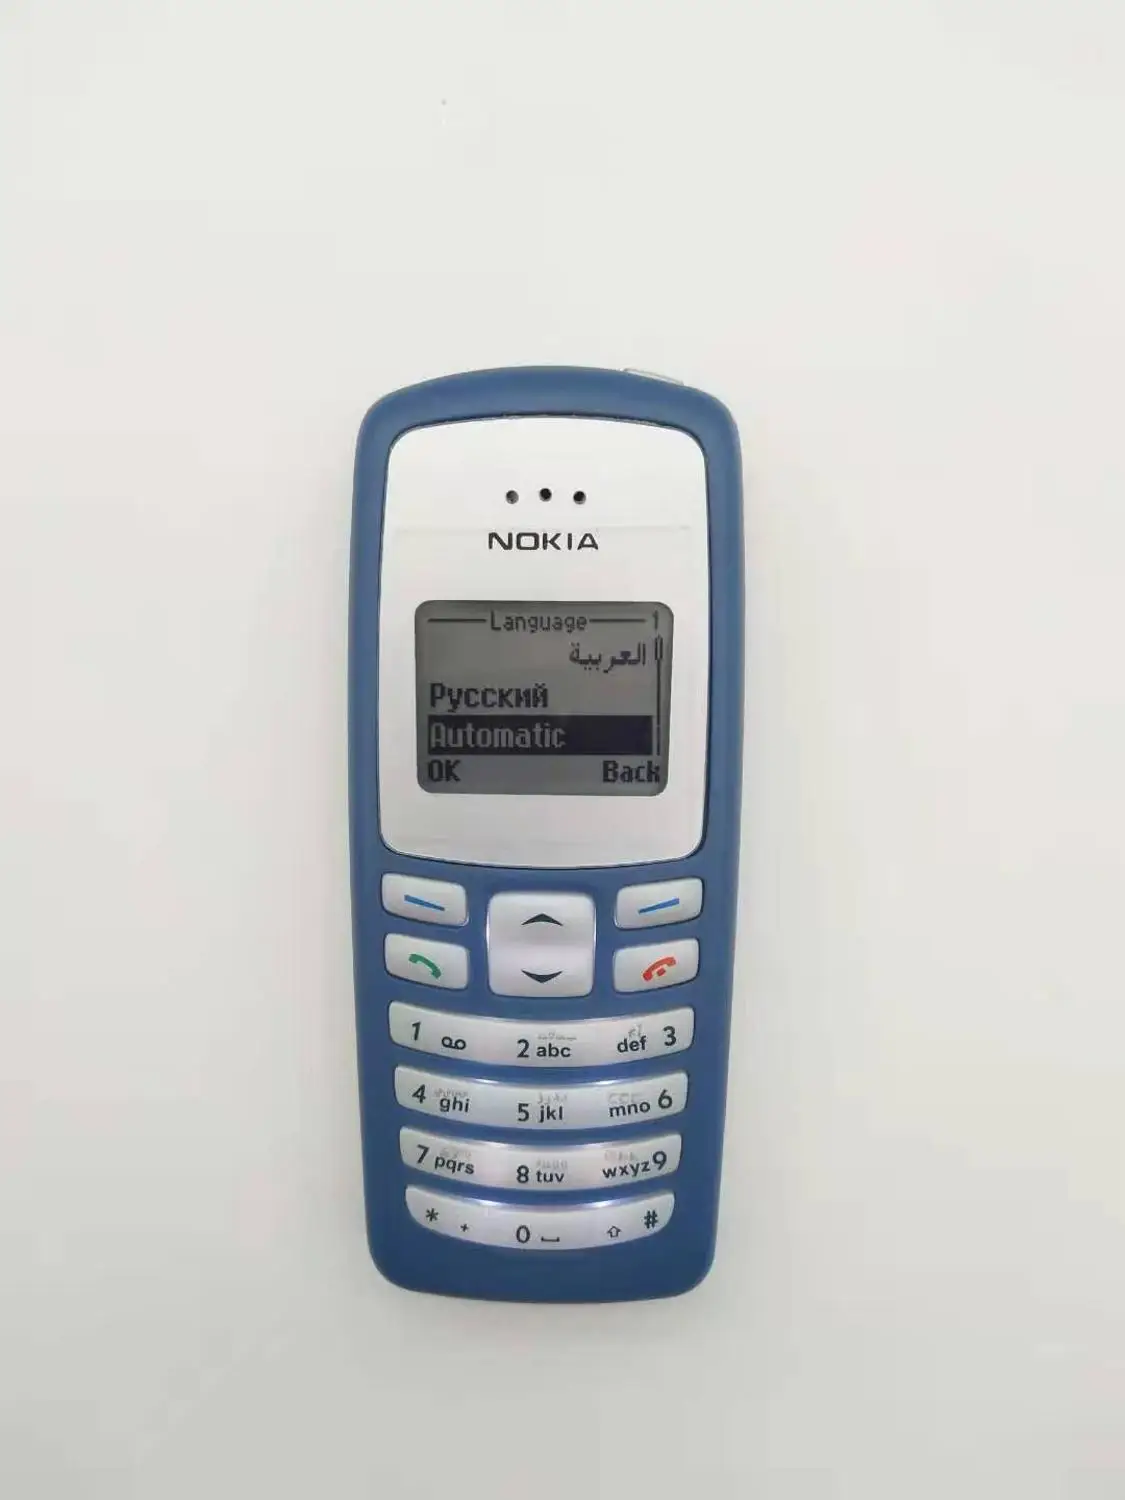 nokia 2100 refurbished original unlocked nokia 2100 gsm 2g 680 mah cheap refurbished bar cell phone free shipping free global shipping